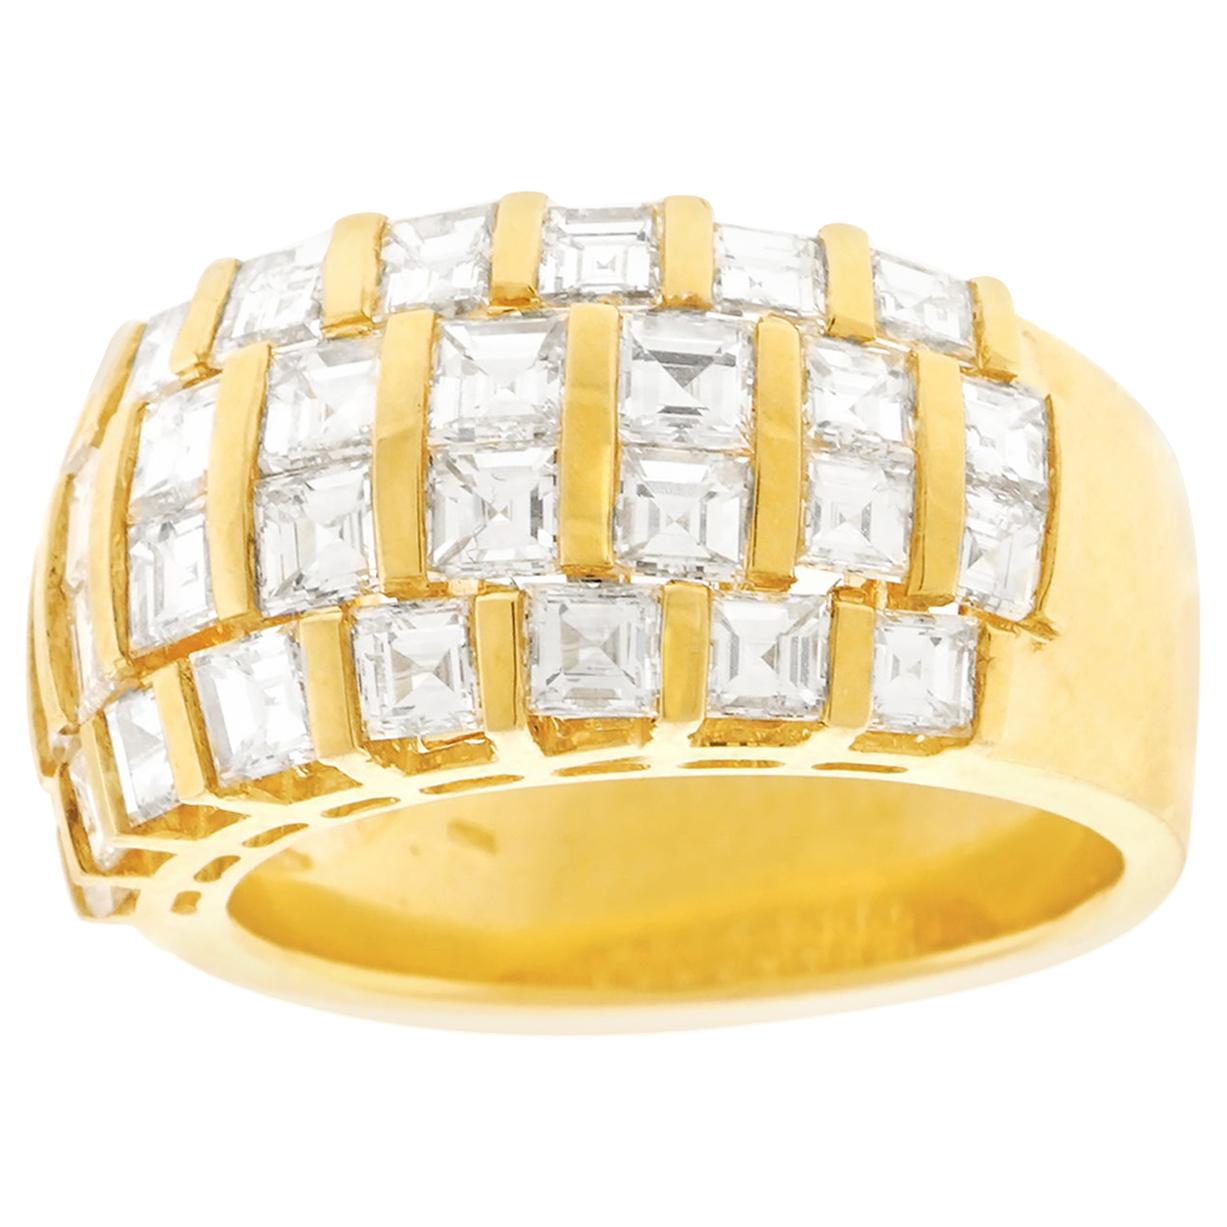 Swiss Modern Seventies Diamond-Set Gold Ring